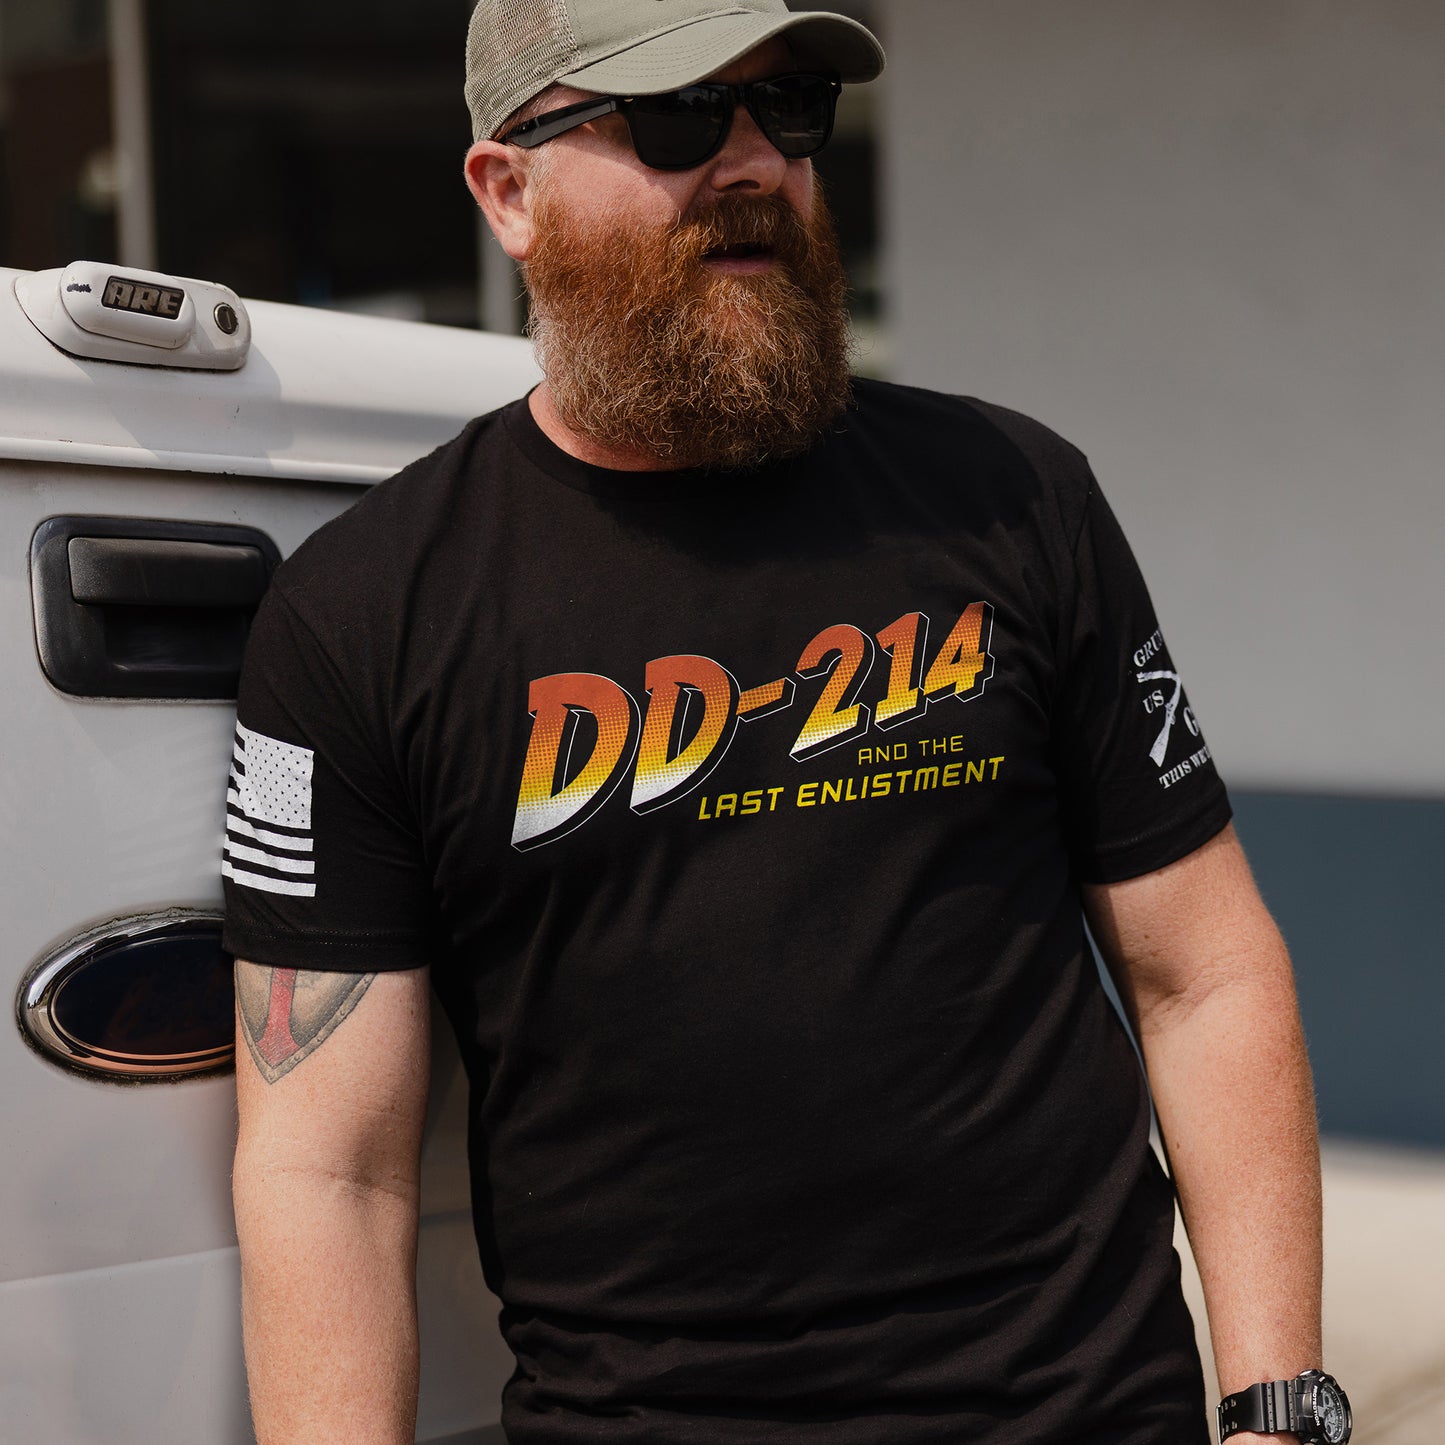 Veteran Shirts - DD214 